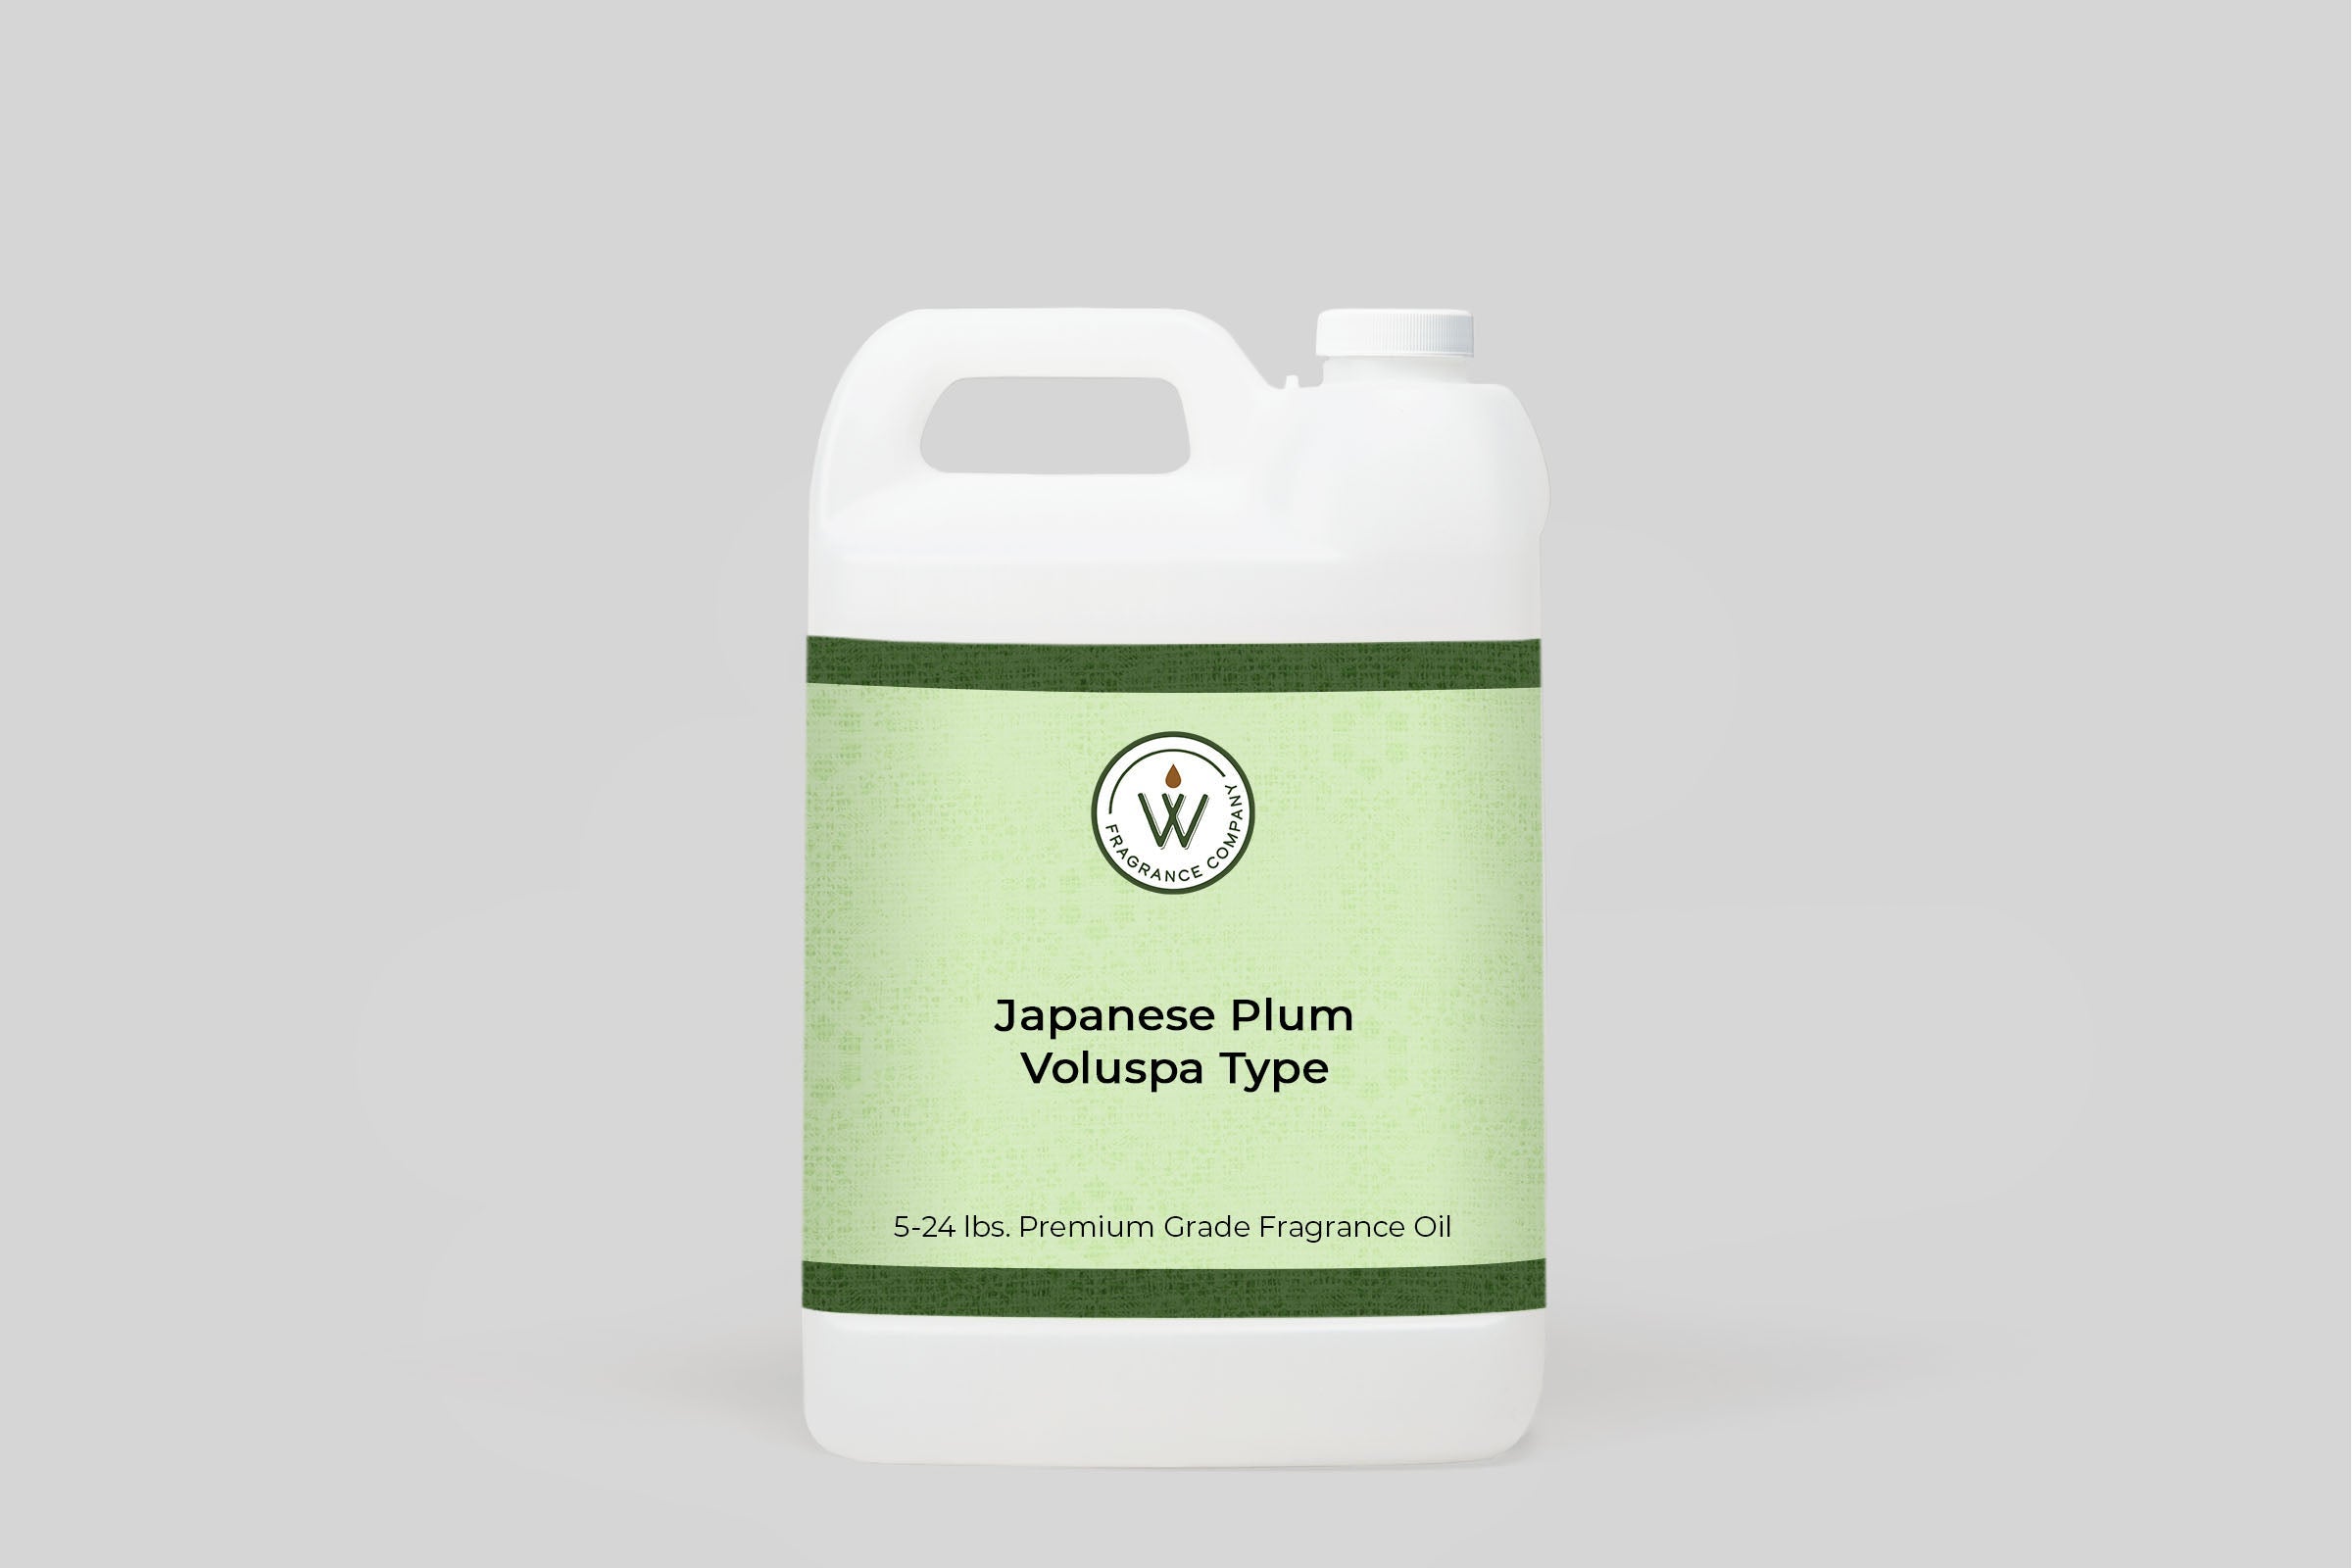 Japanese Plum Voluspa Type Fragrance Oil